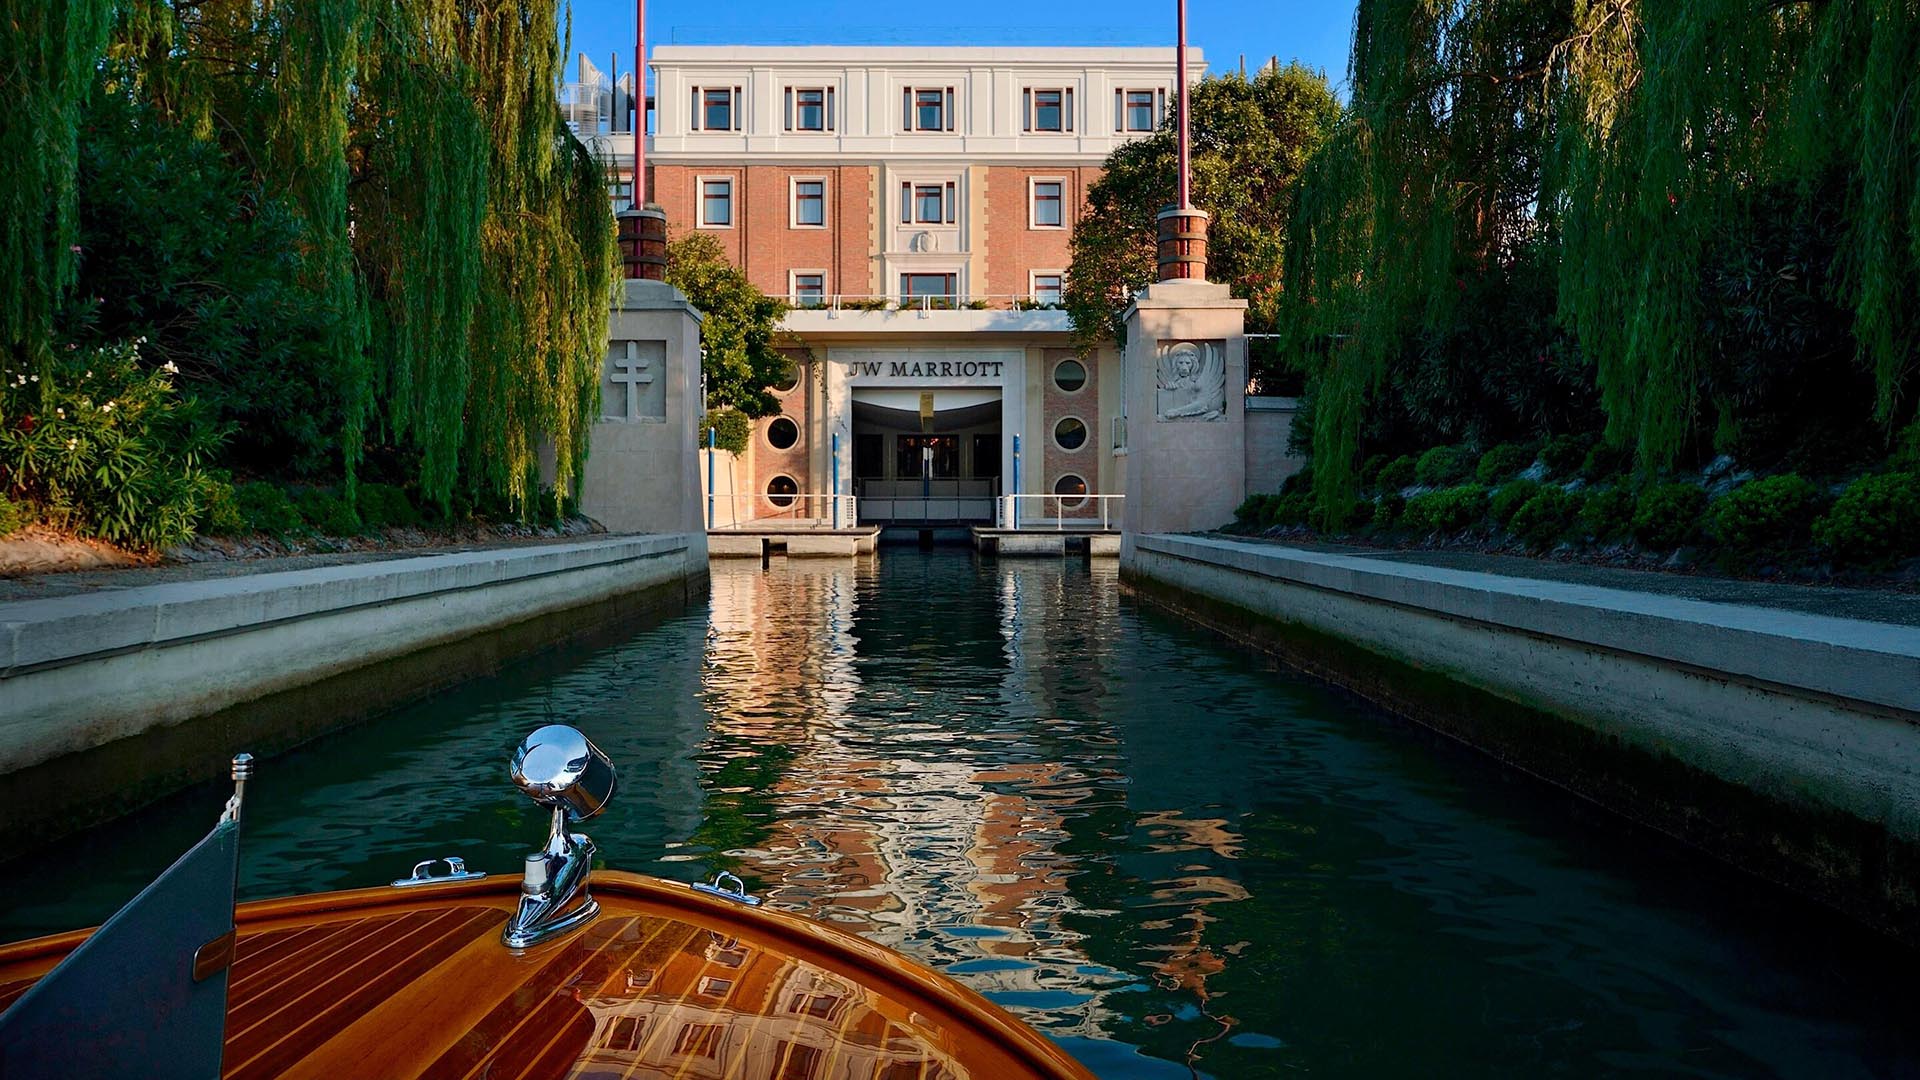 Solace Found: The JW Marriott Venice Is a Destination Within a Destination